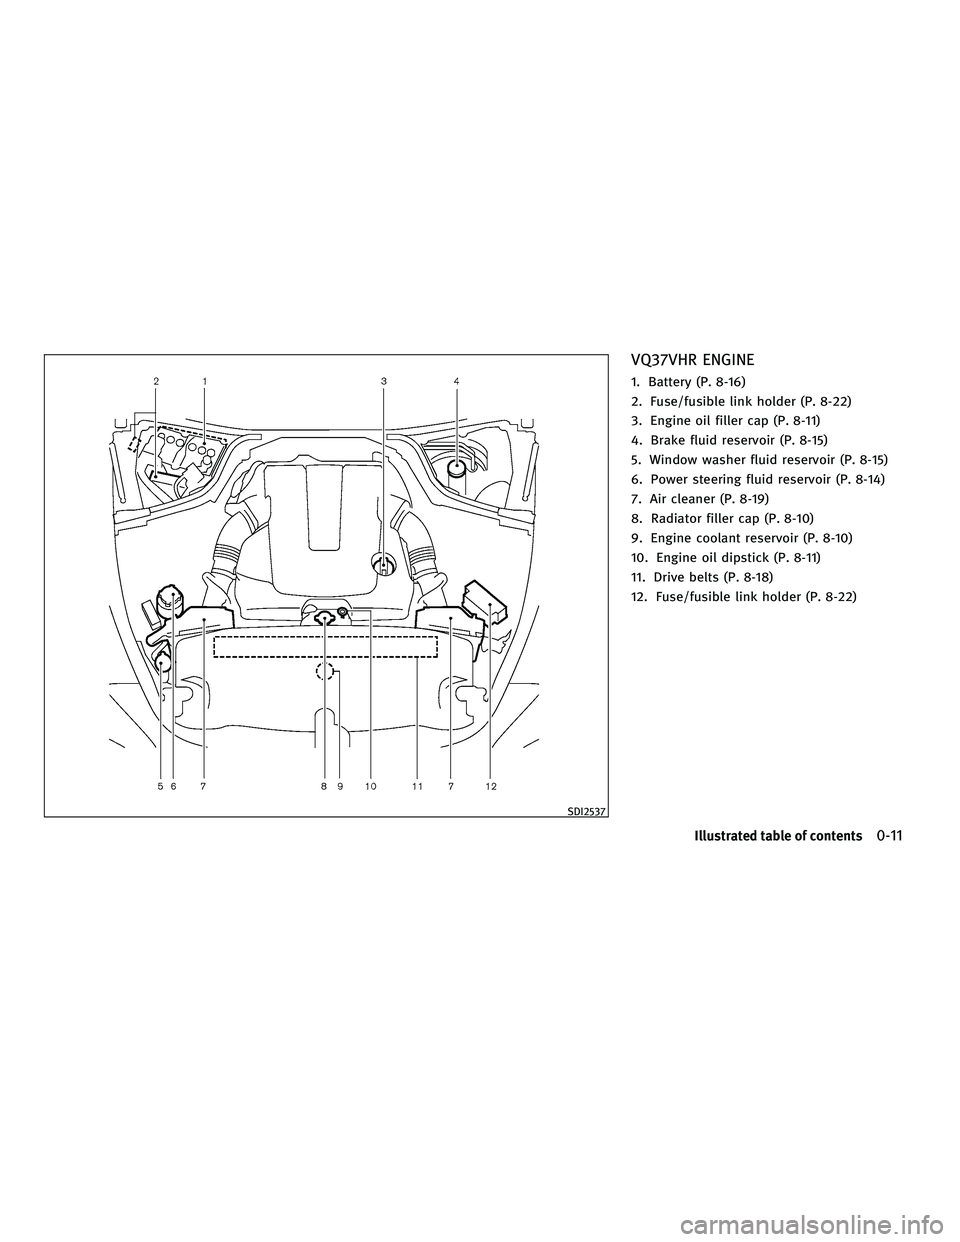 INFINITI M 2011  Owners Manual VQ37VHR ENGINE
1. Battery (P. 8-16)
2. Fuse/fusible link holder (P. 8-22)
3. Engine oil filler cap (P. 8-11)
4. Brake fluid reservoir (P. 8-15)
5. Window washer fluid reservoir (P. 8-15)
6. Power stee